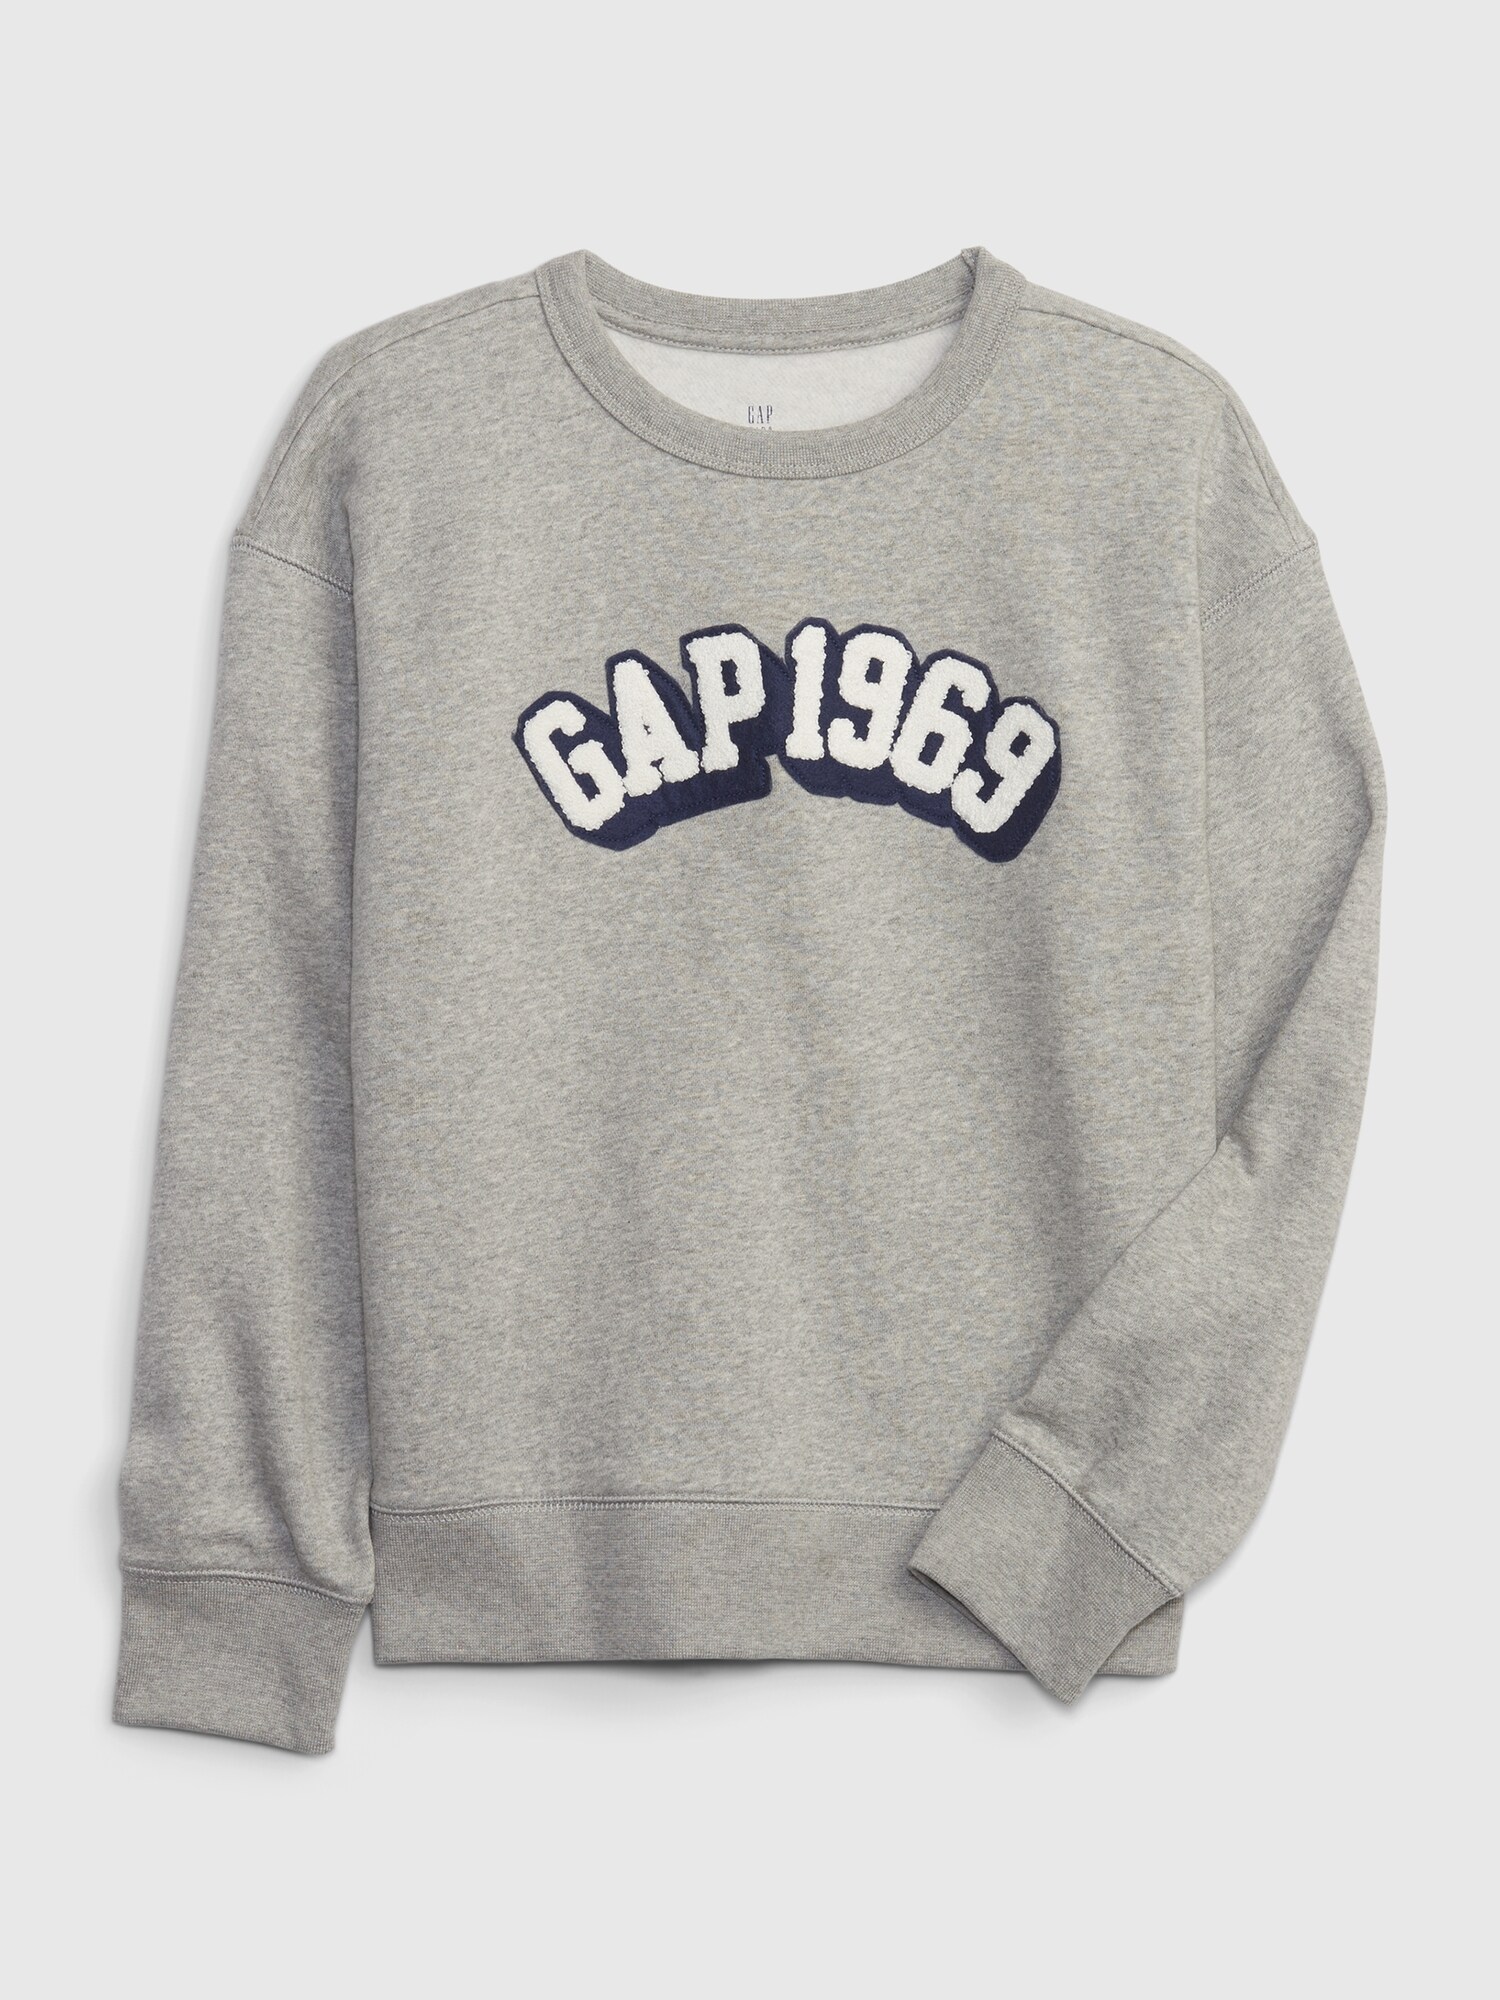 GAP 1969 ロゴ スウェット・トレーナー (キッズ) Gap公式オンラインストア